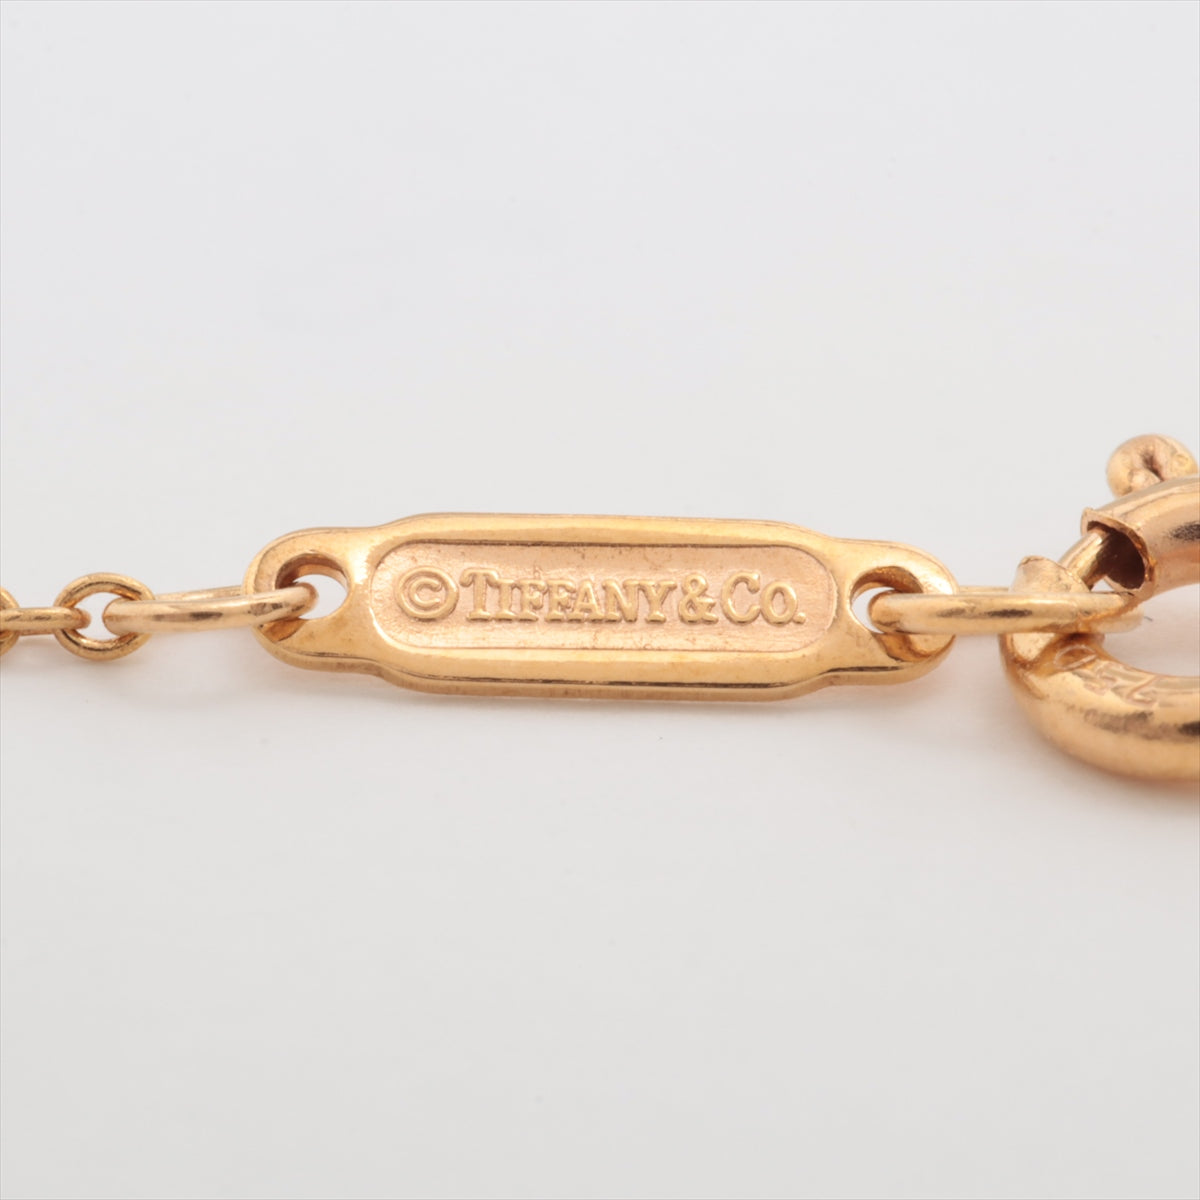 Tiffany Keypendant Necklace 750 (PG) 3.1g